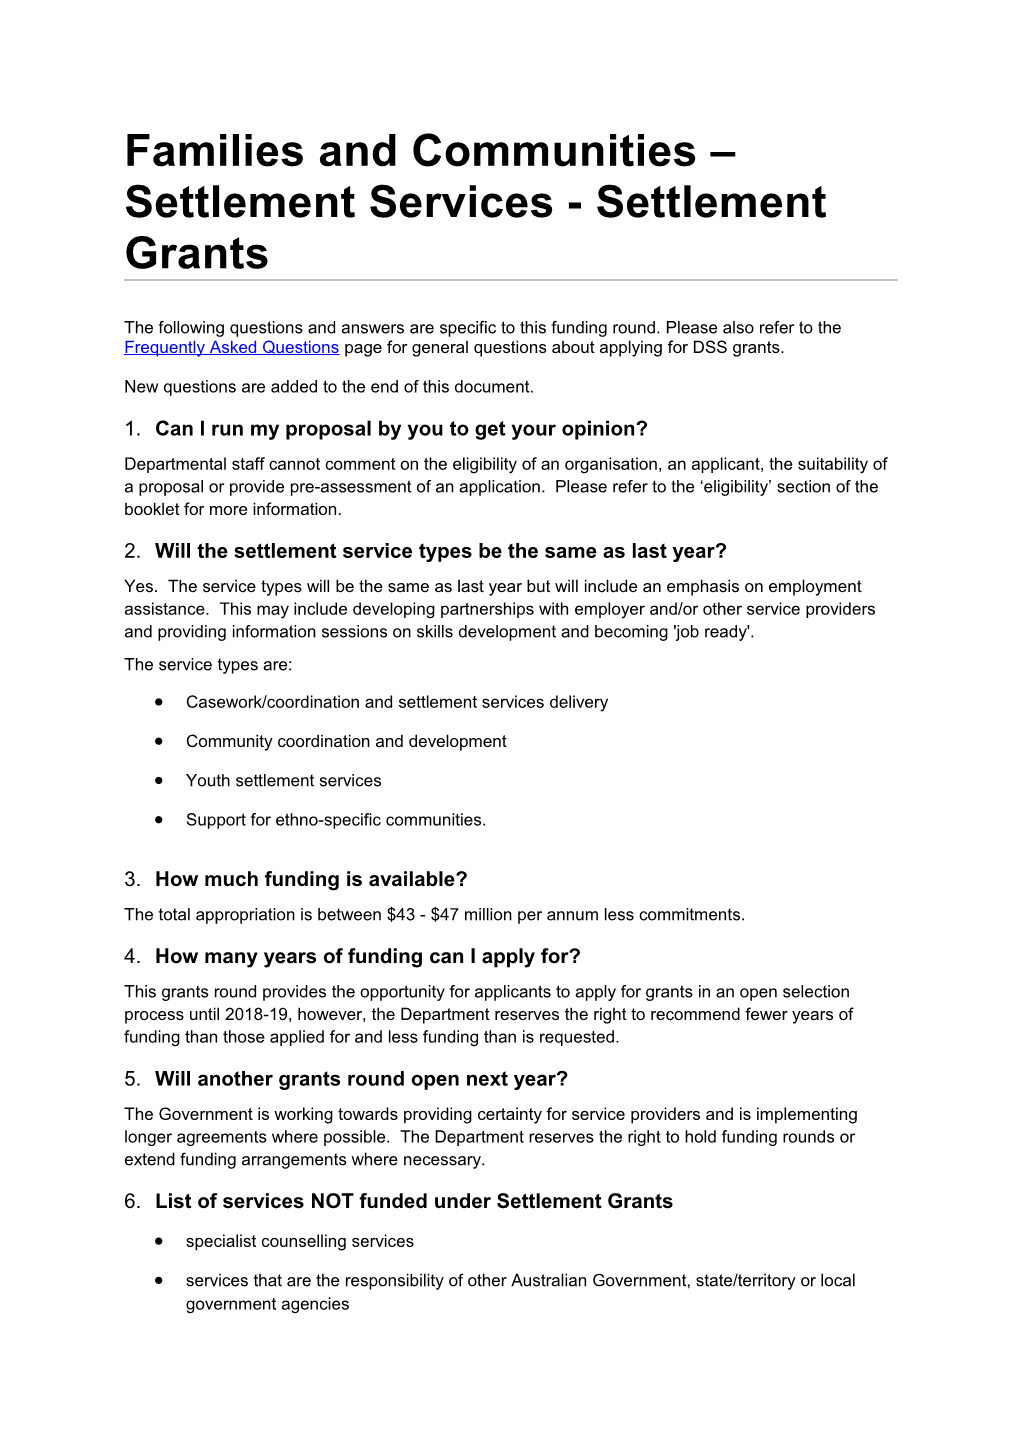 Families and Communities Settlement Services - Settlement Grants